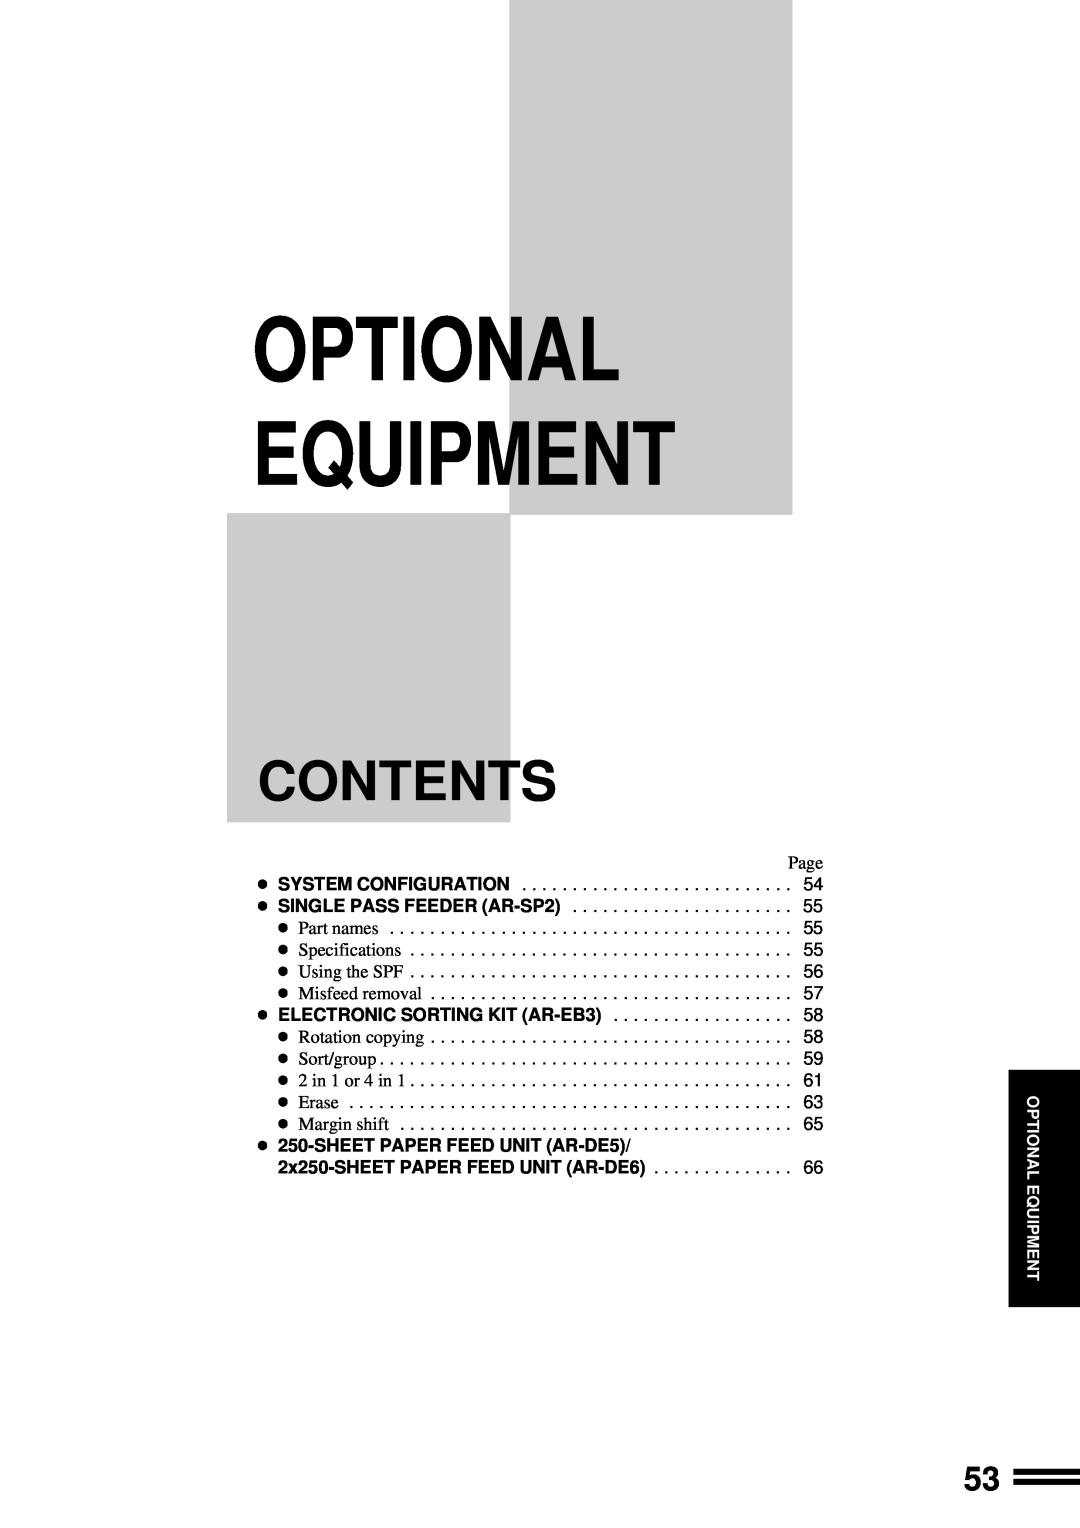 Sharp AR-163, AR-162 operation manual Contents, Optional Equipment 